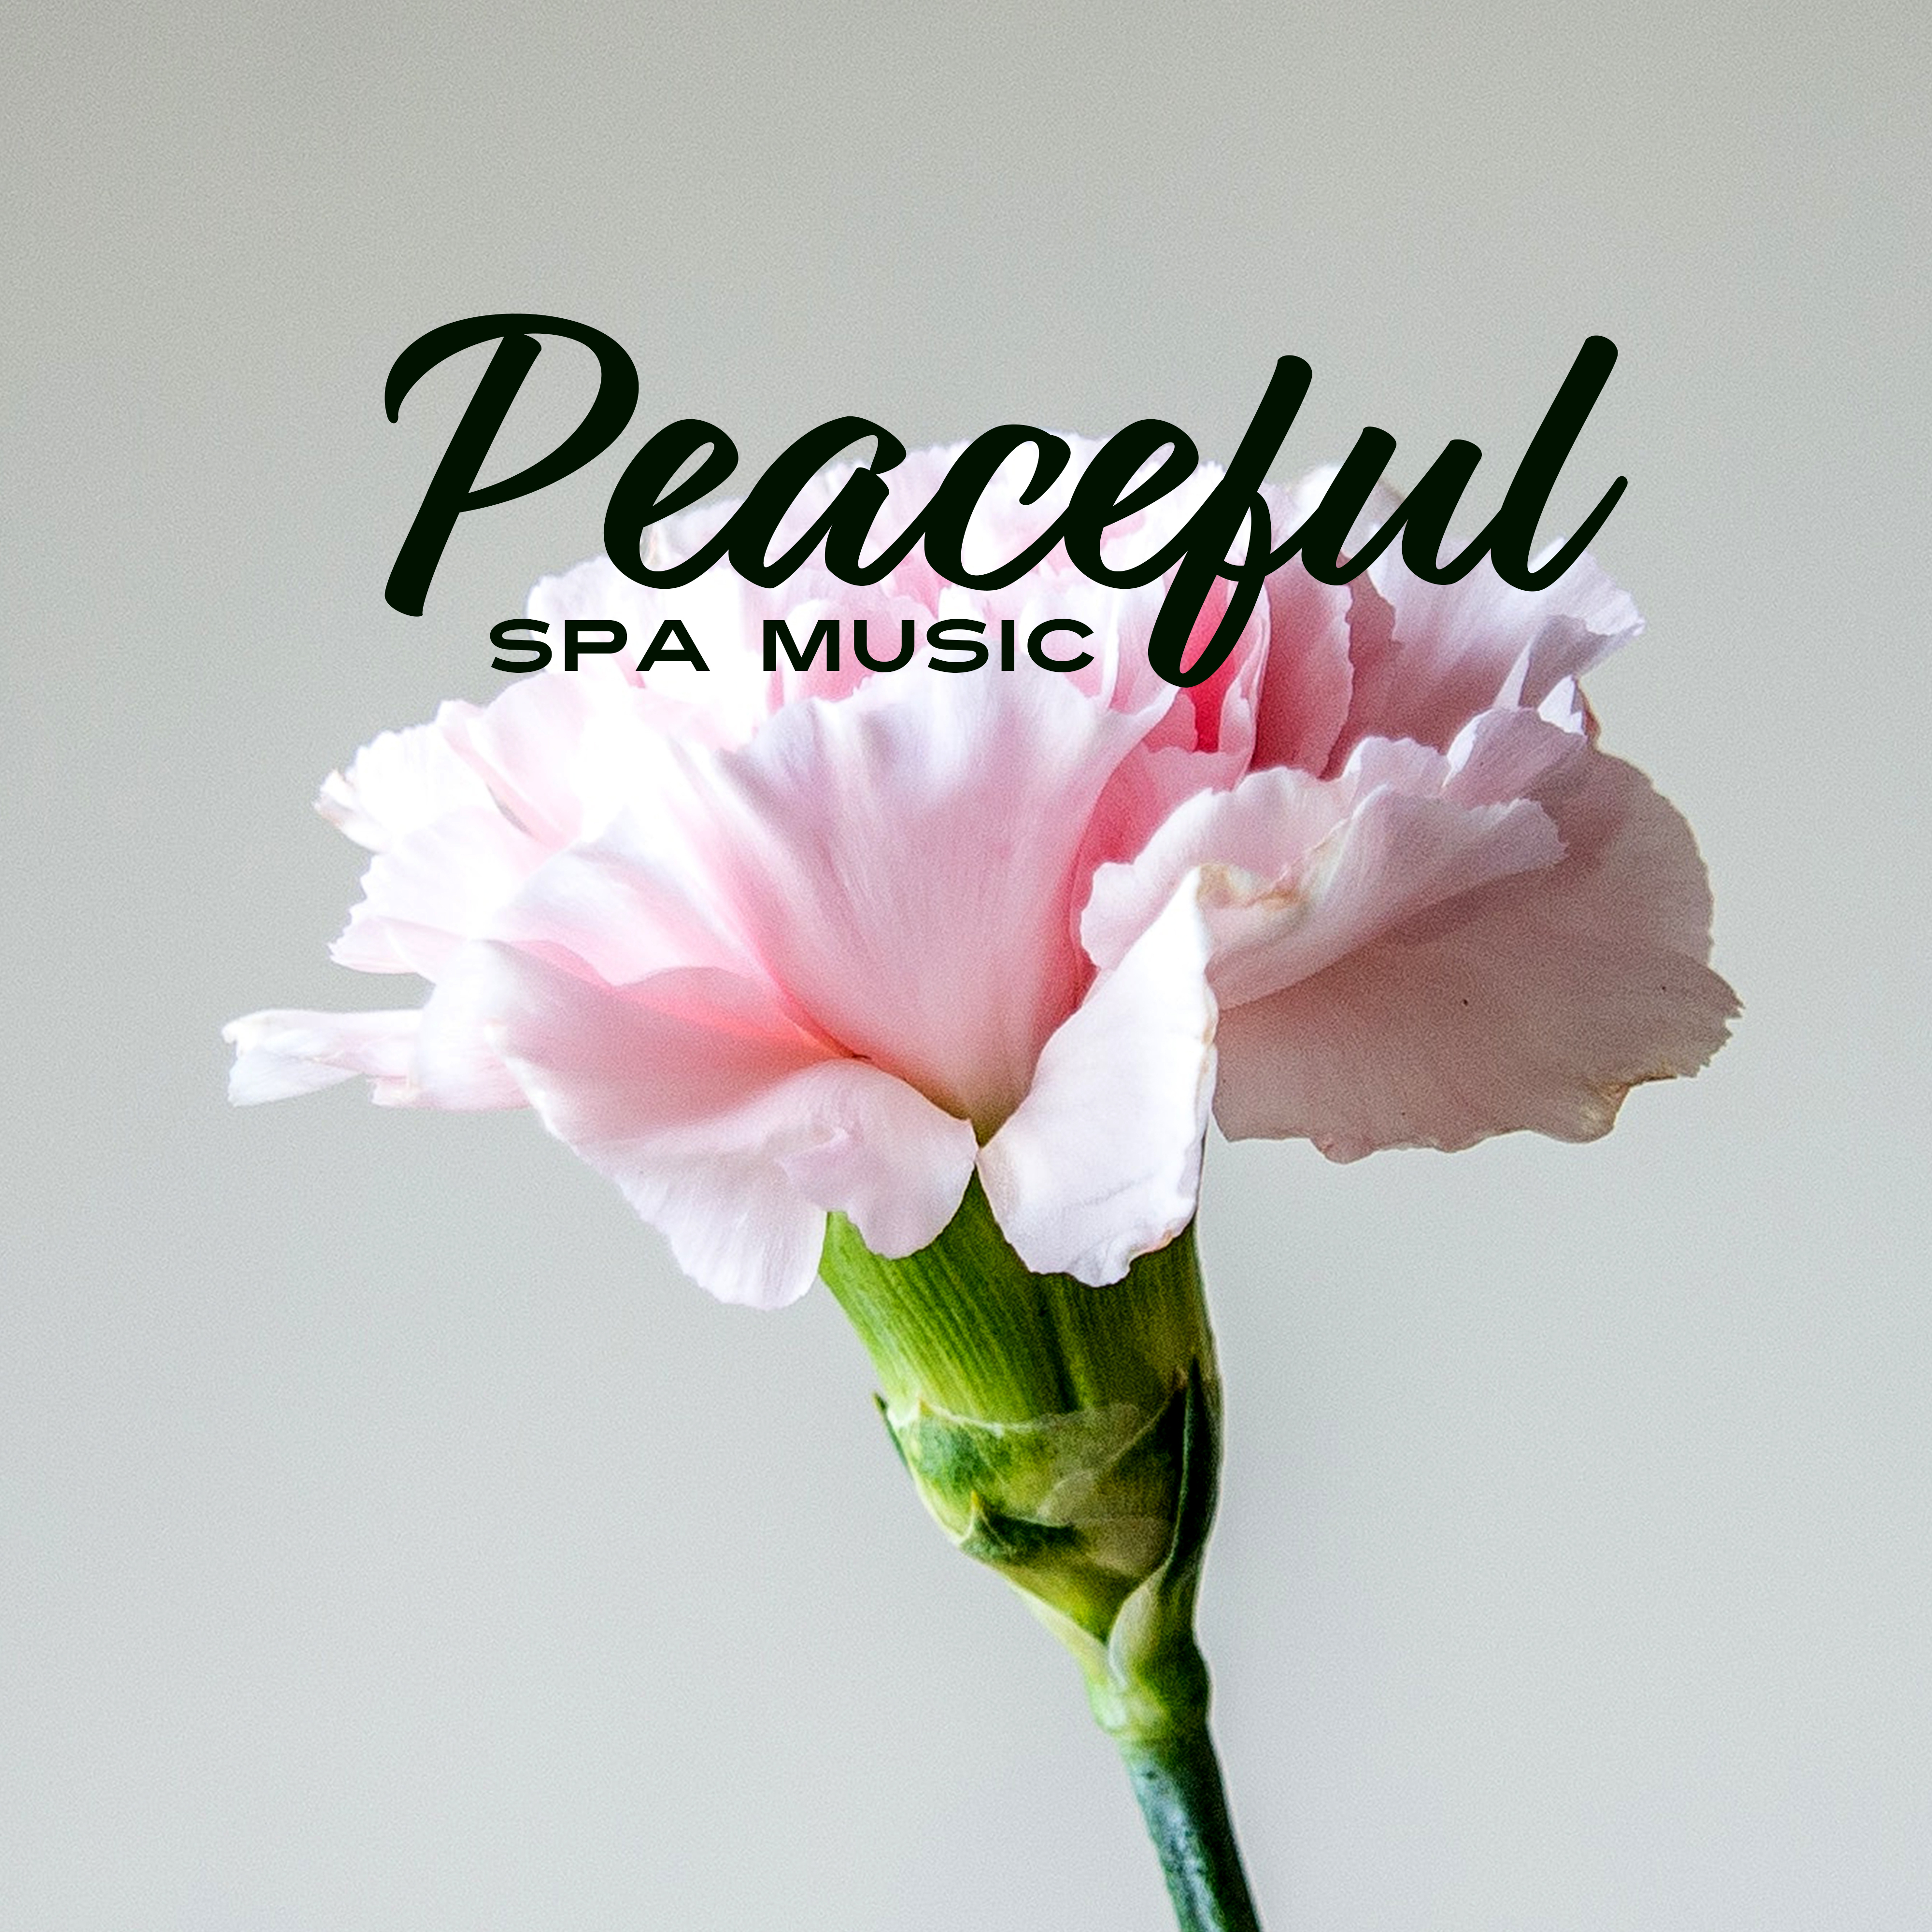 Peaceful Spa Music